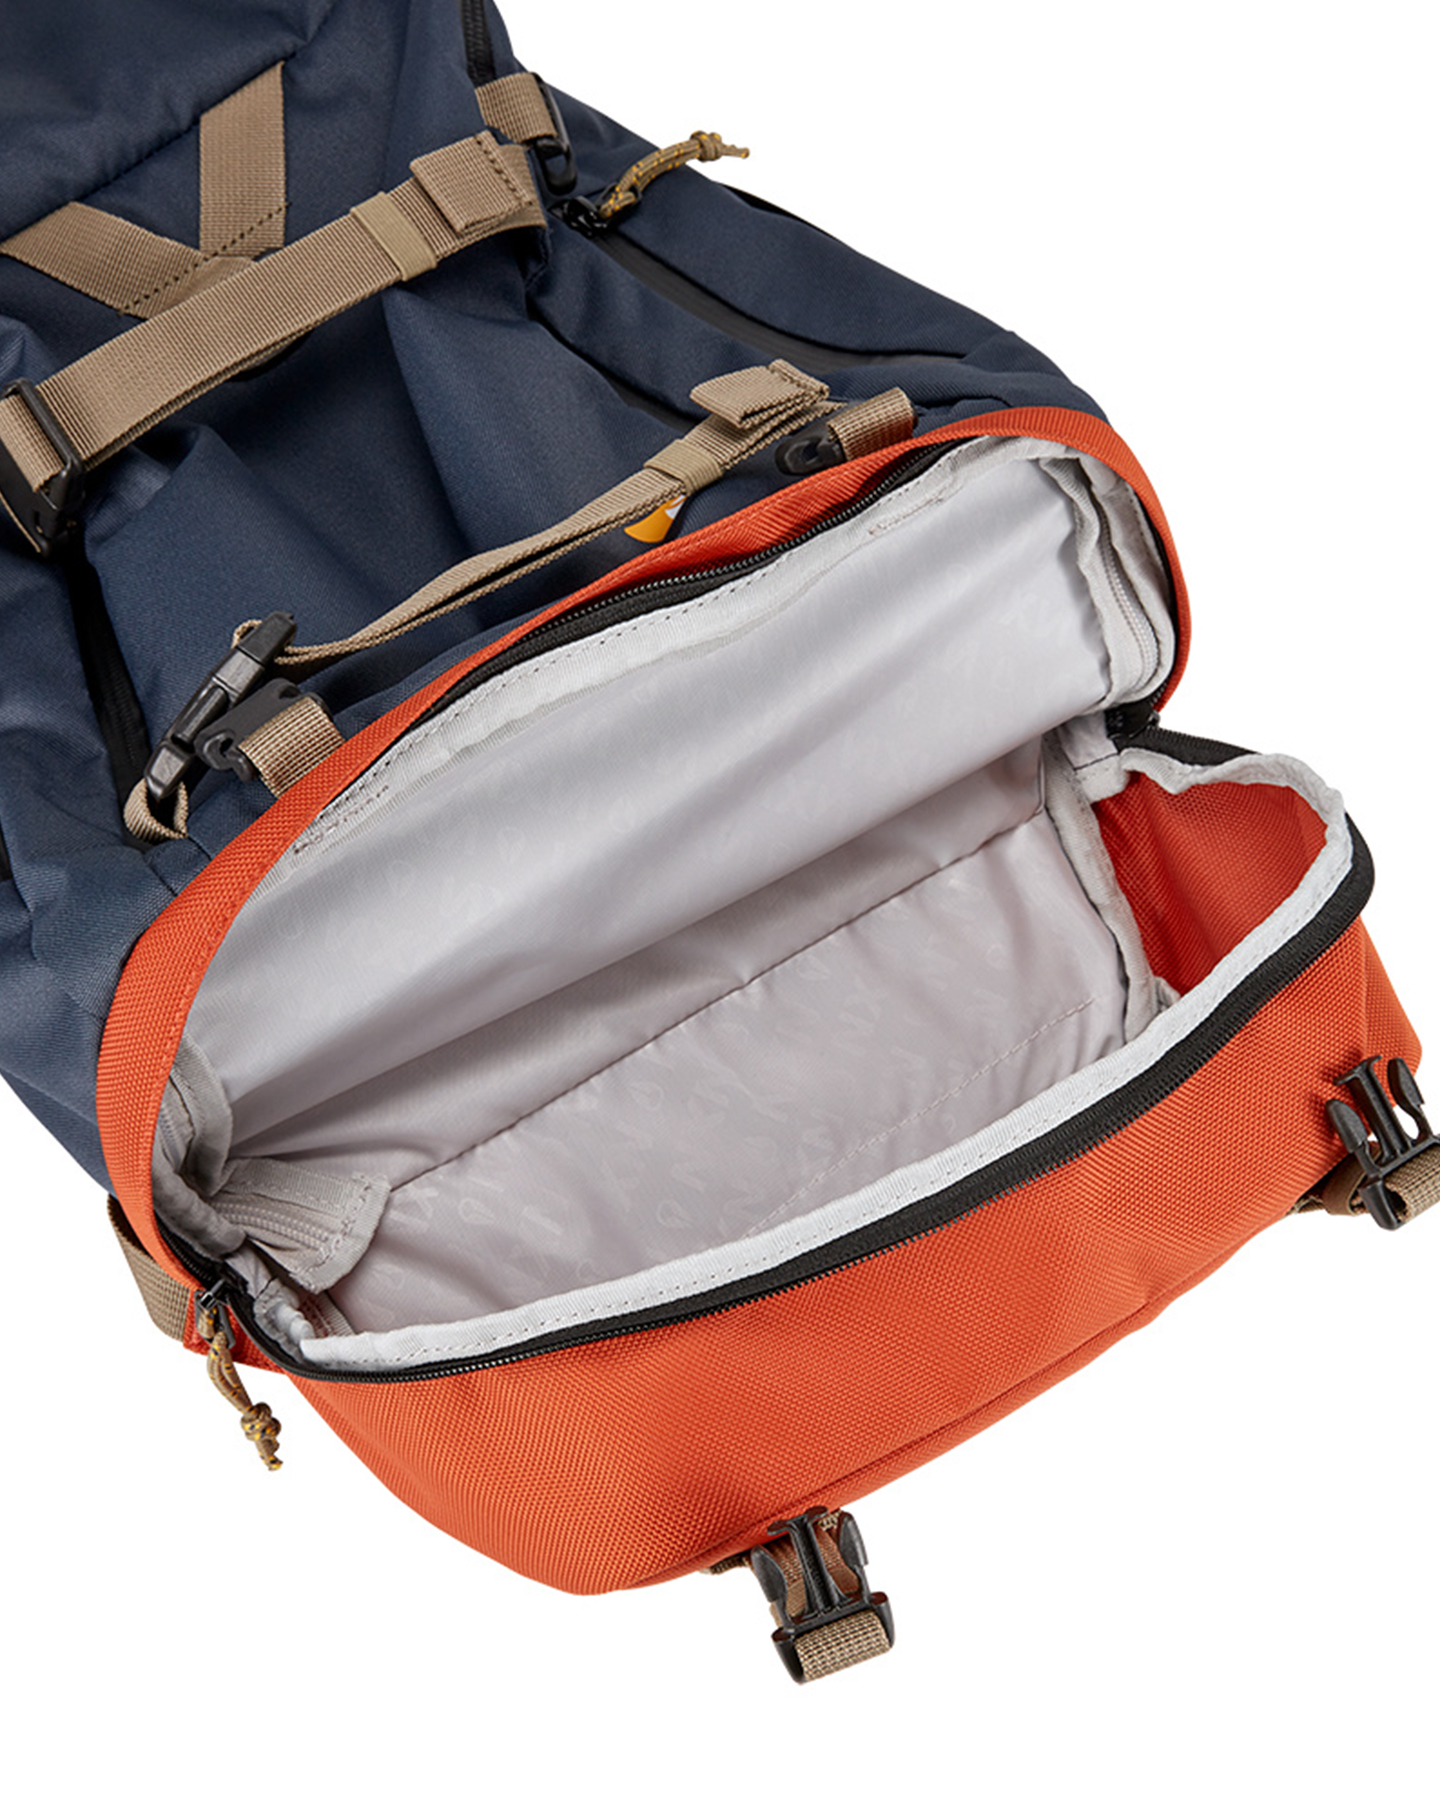 Nixon Hauler 35L Backpack - Navy Multi | SurfStitch